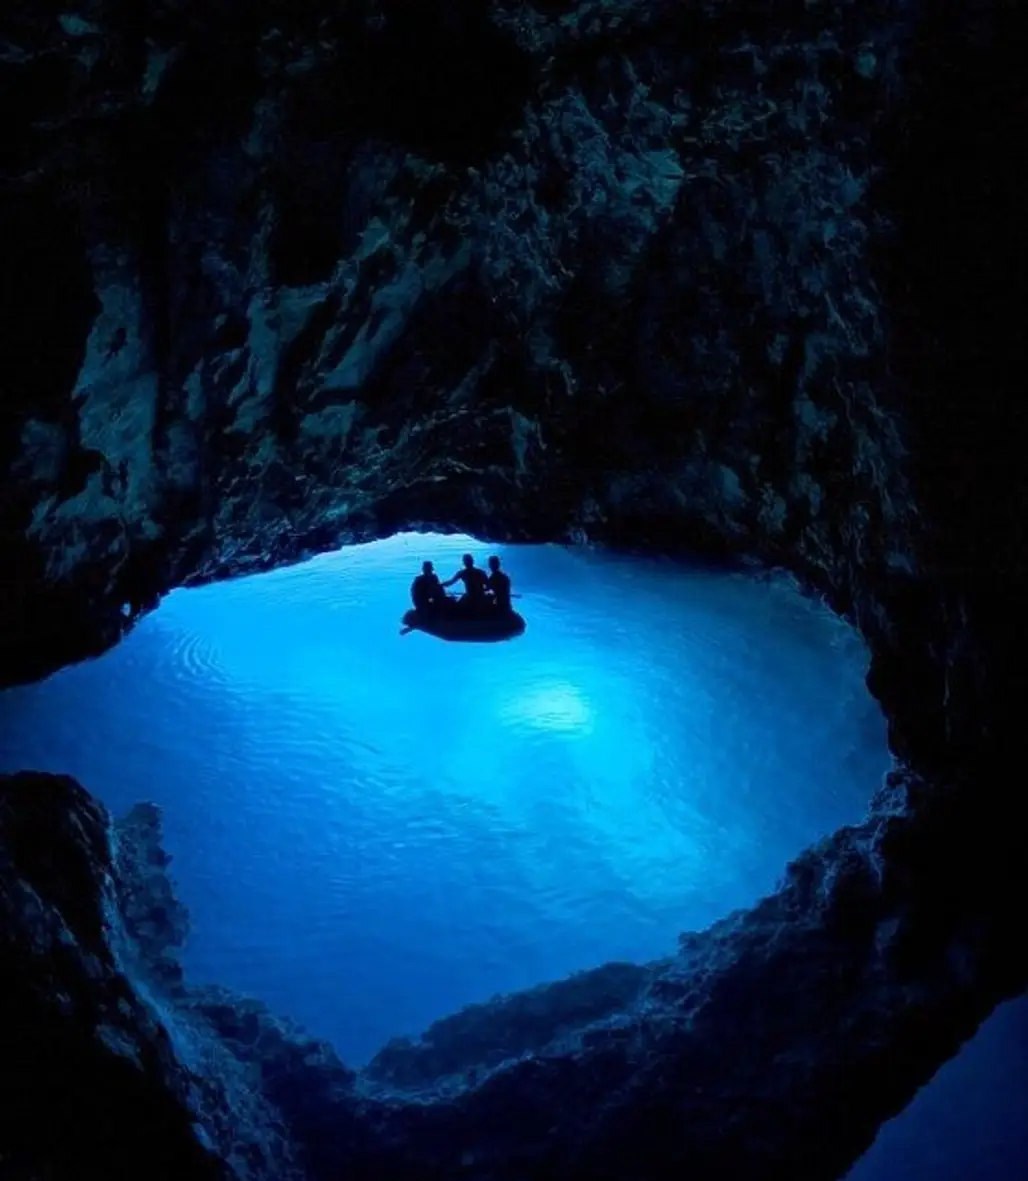 Modra Špilja (Blue Grotto)